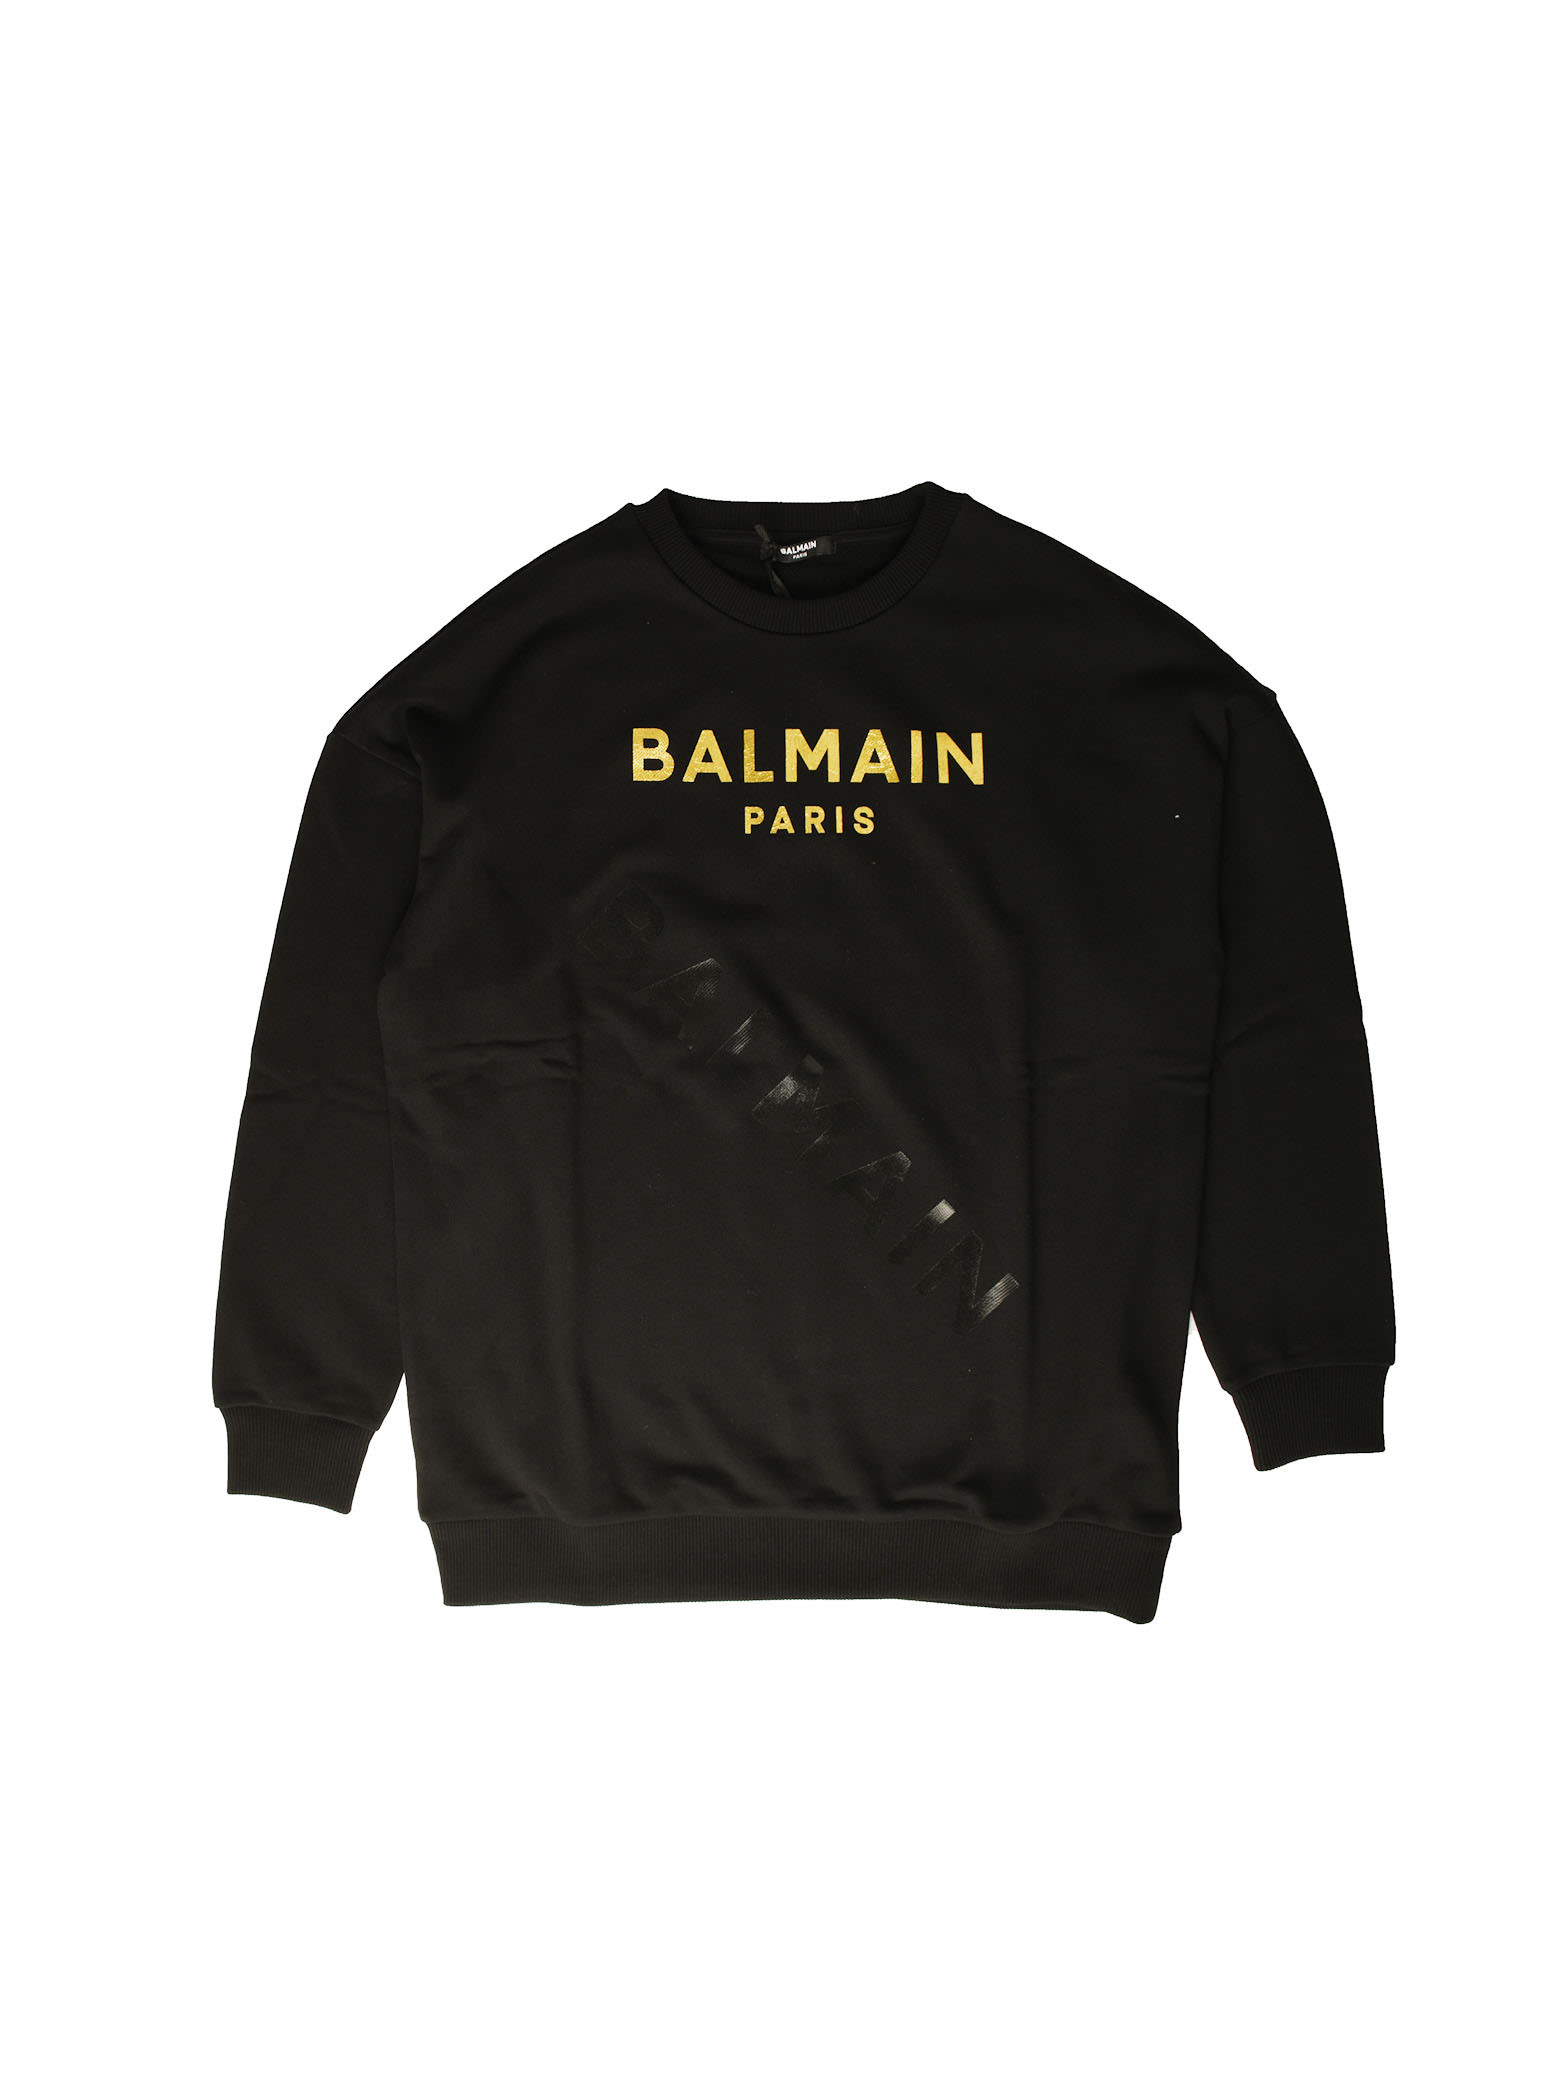 Balmain Black Sweatshirt With Gold Logo